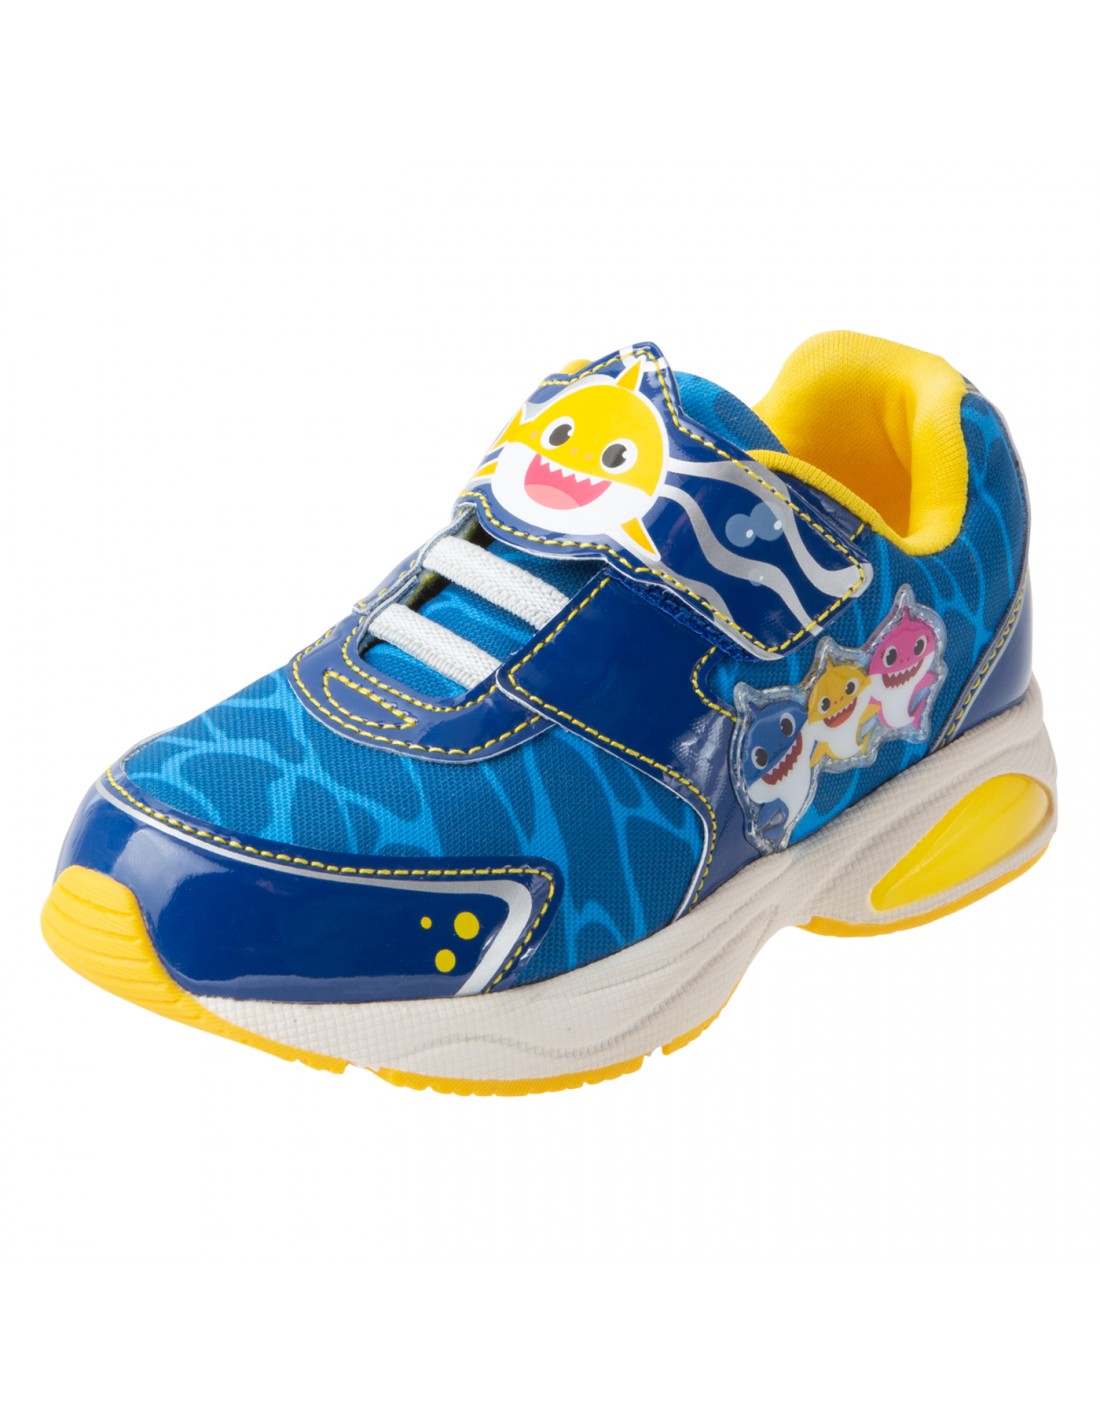 Zapatos Babyshark para niño peqieño